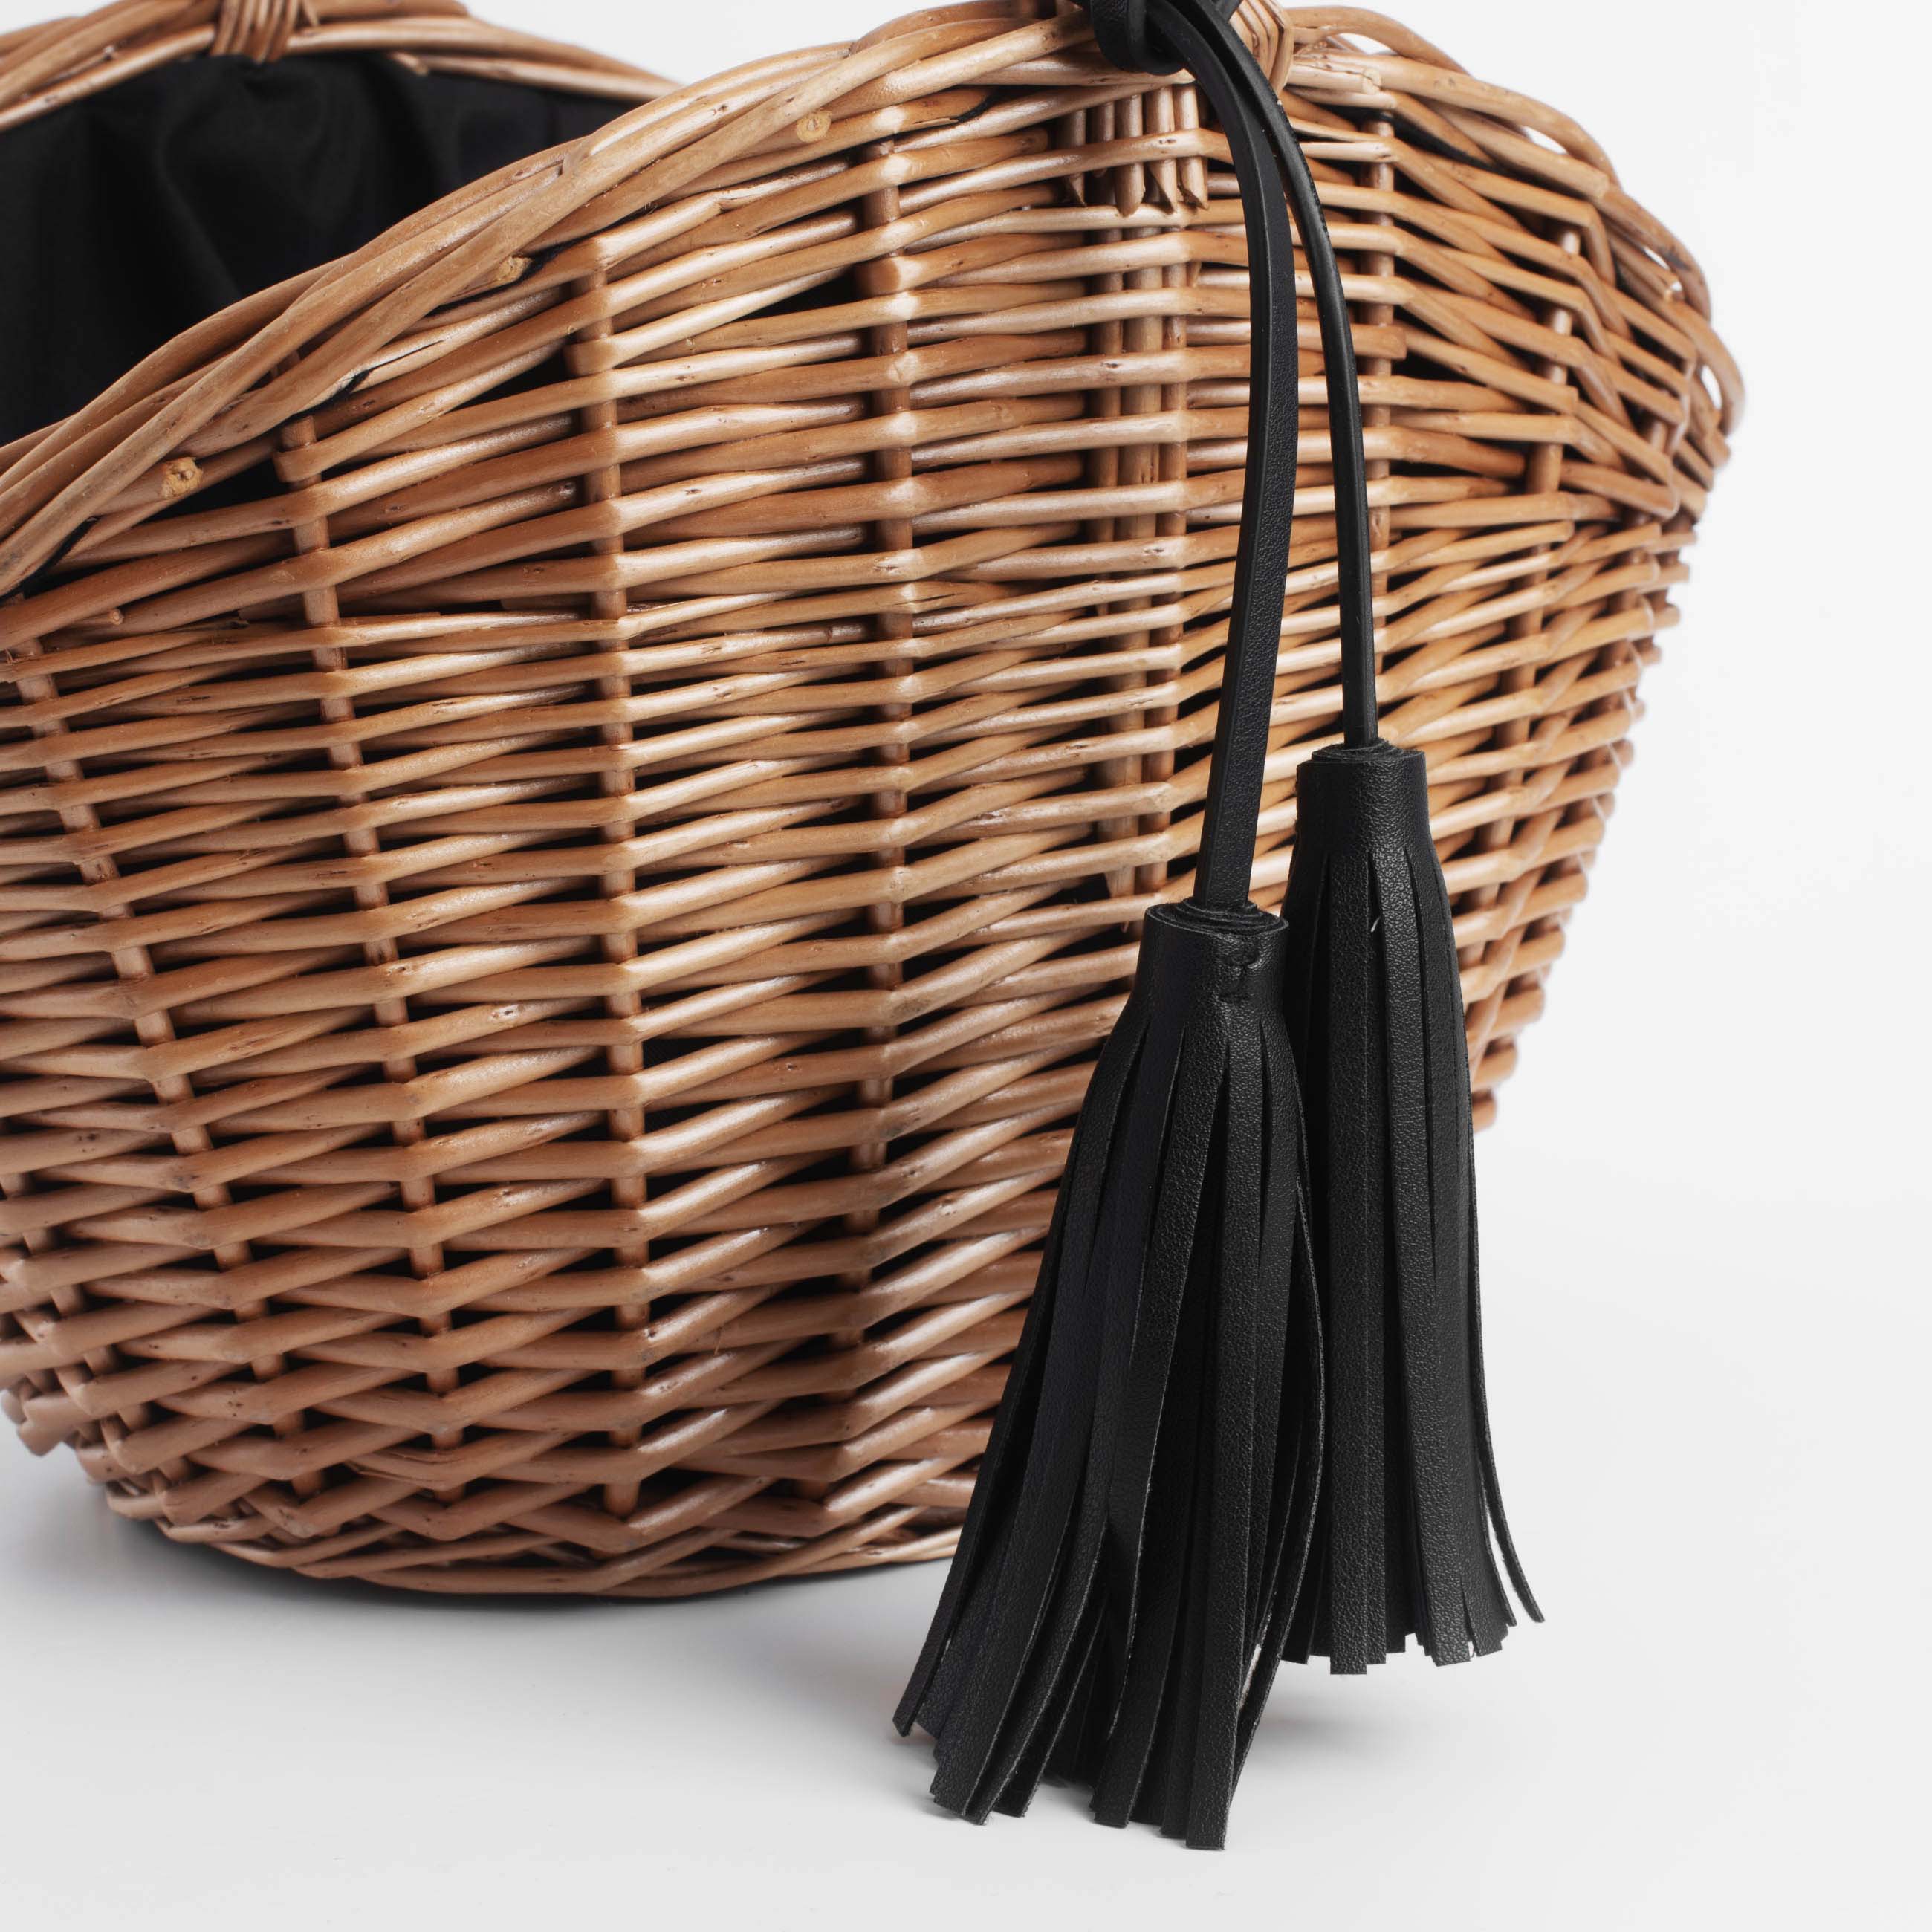 Корзина-сумка, 32 см, ива/полиэстер, бежево-черная, Black style изображение № 3